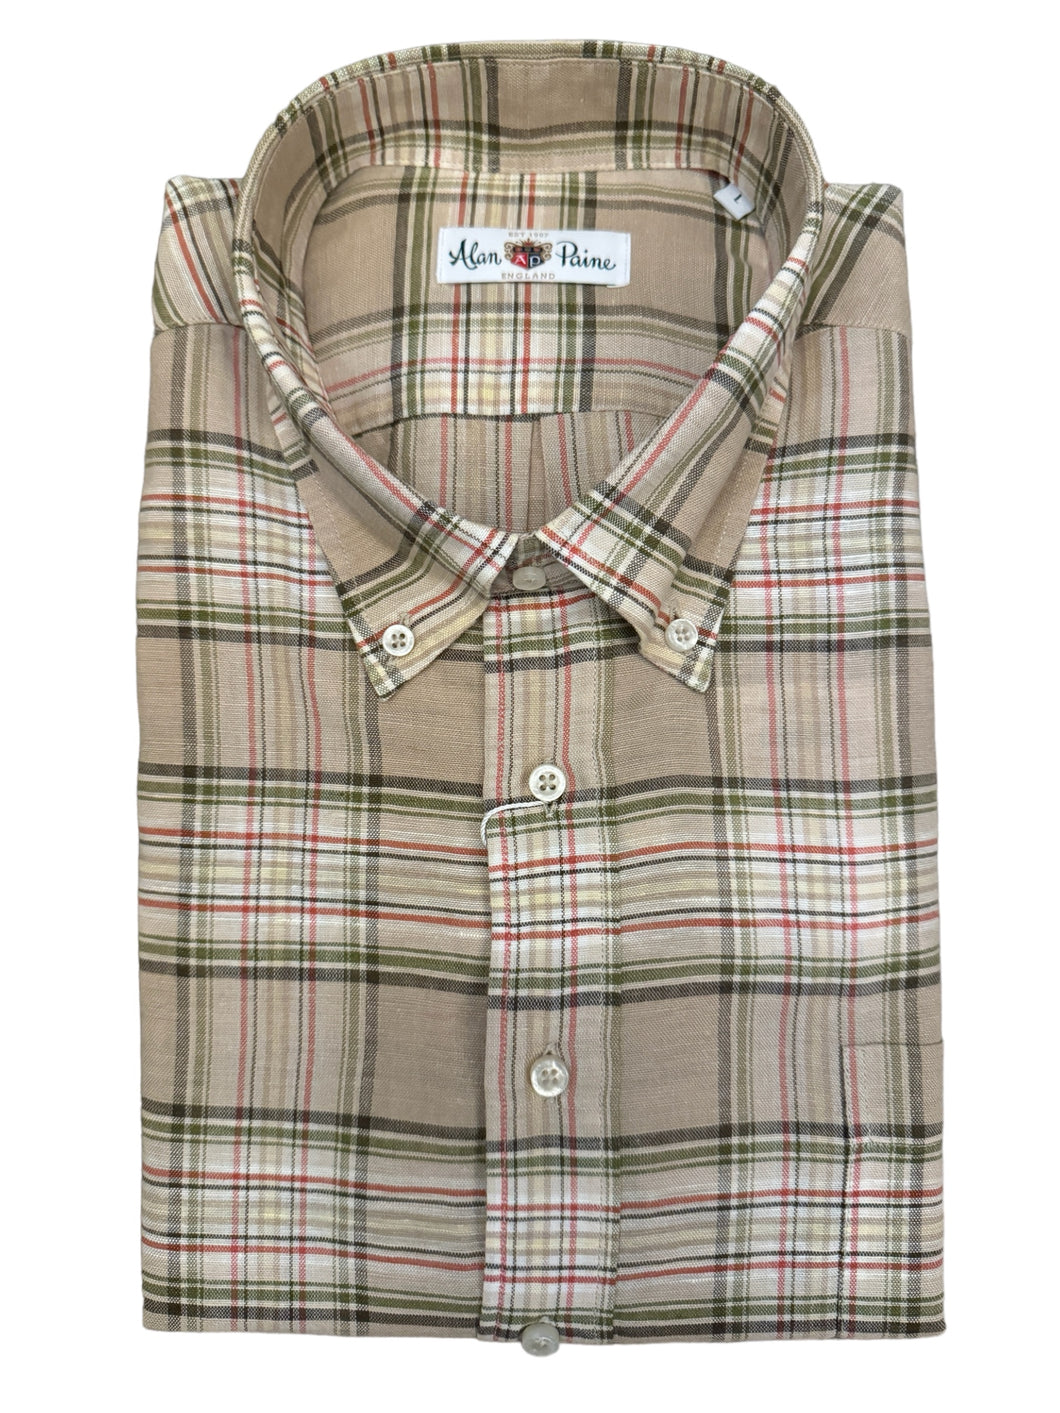 Alan Paine Fleetwood BD Shirt Linen/Cotton Blend - Tan Plaid